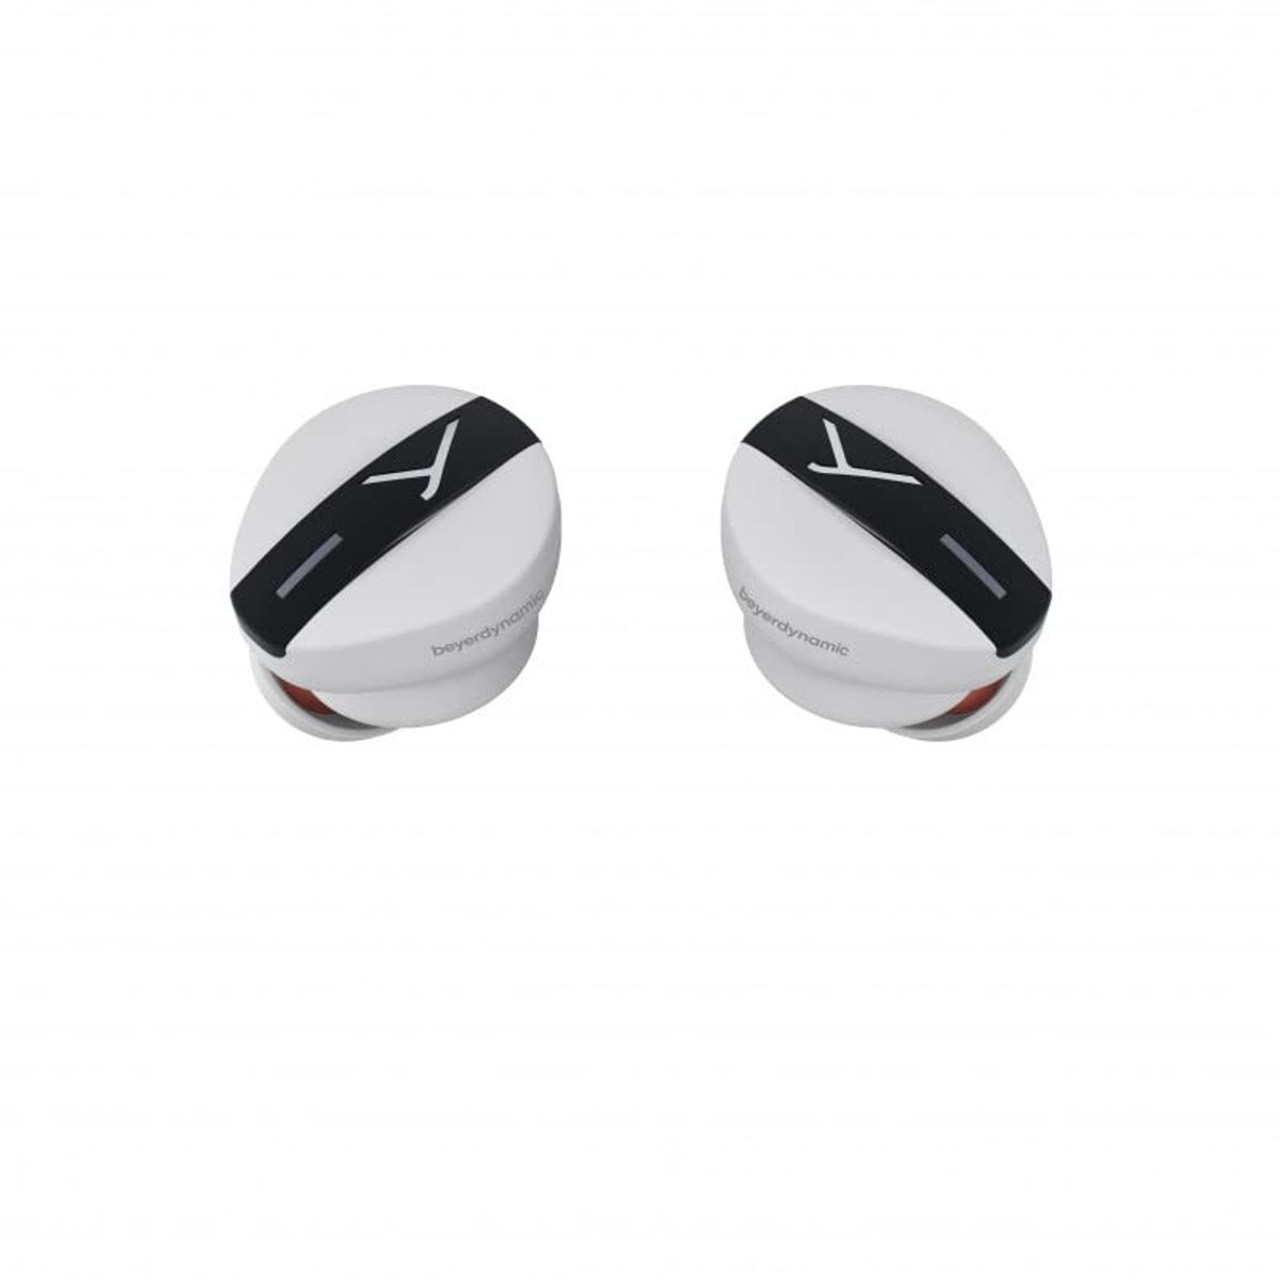 Beyerdynamic Free BYRD True Wireless Bluetooth in-Ear Headphones product image